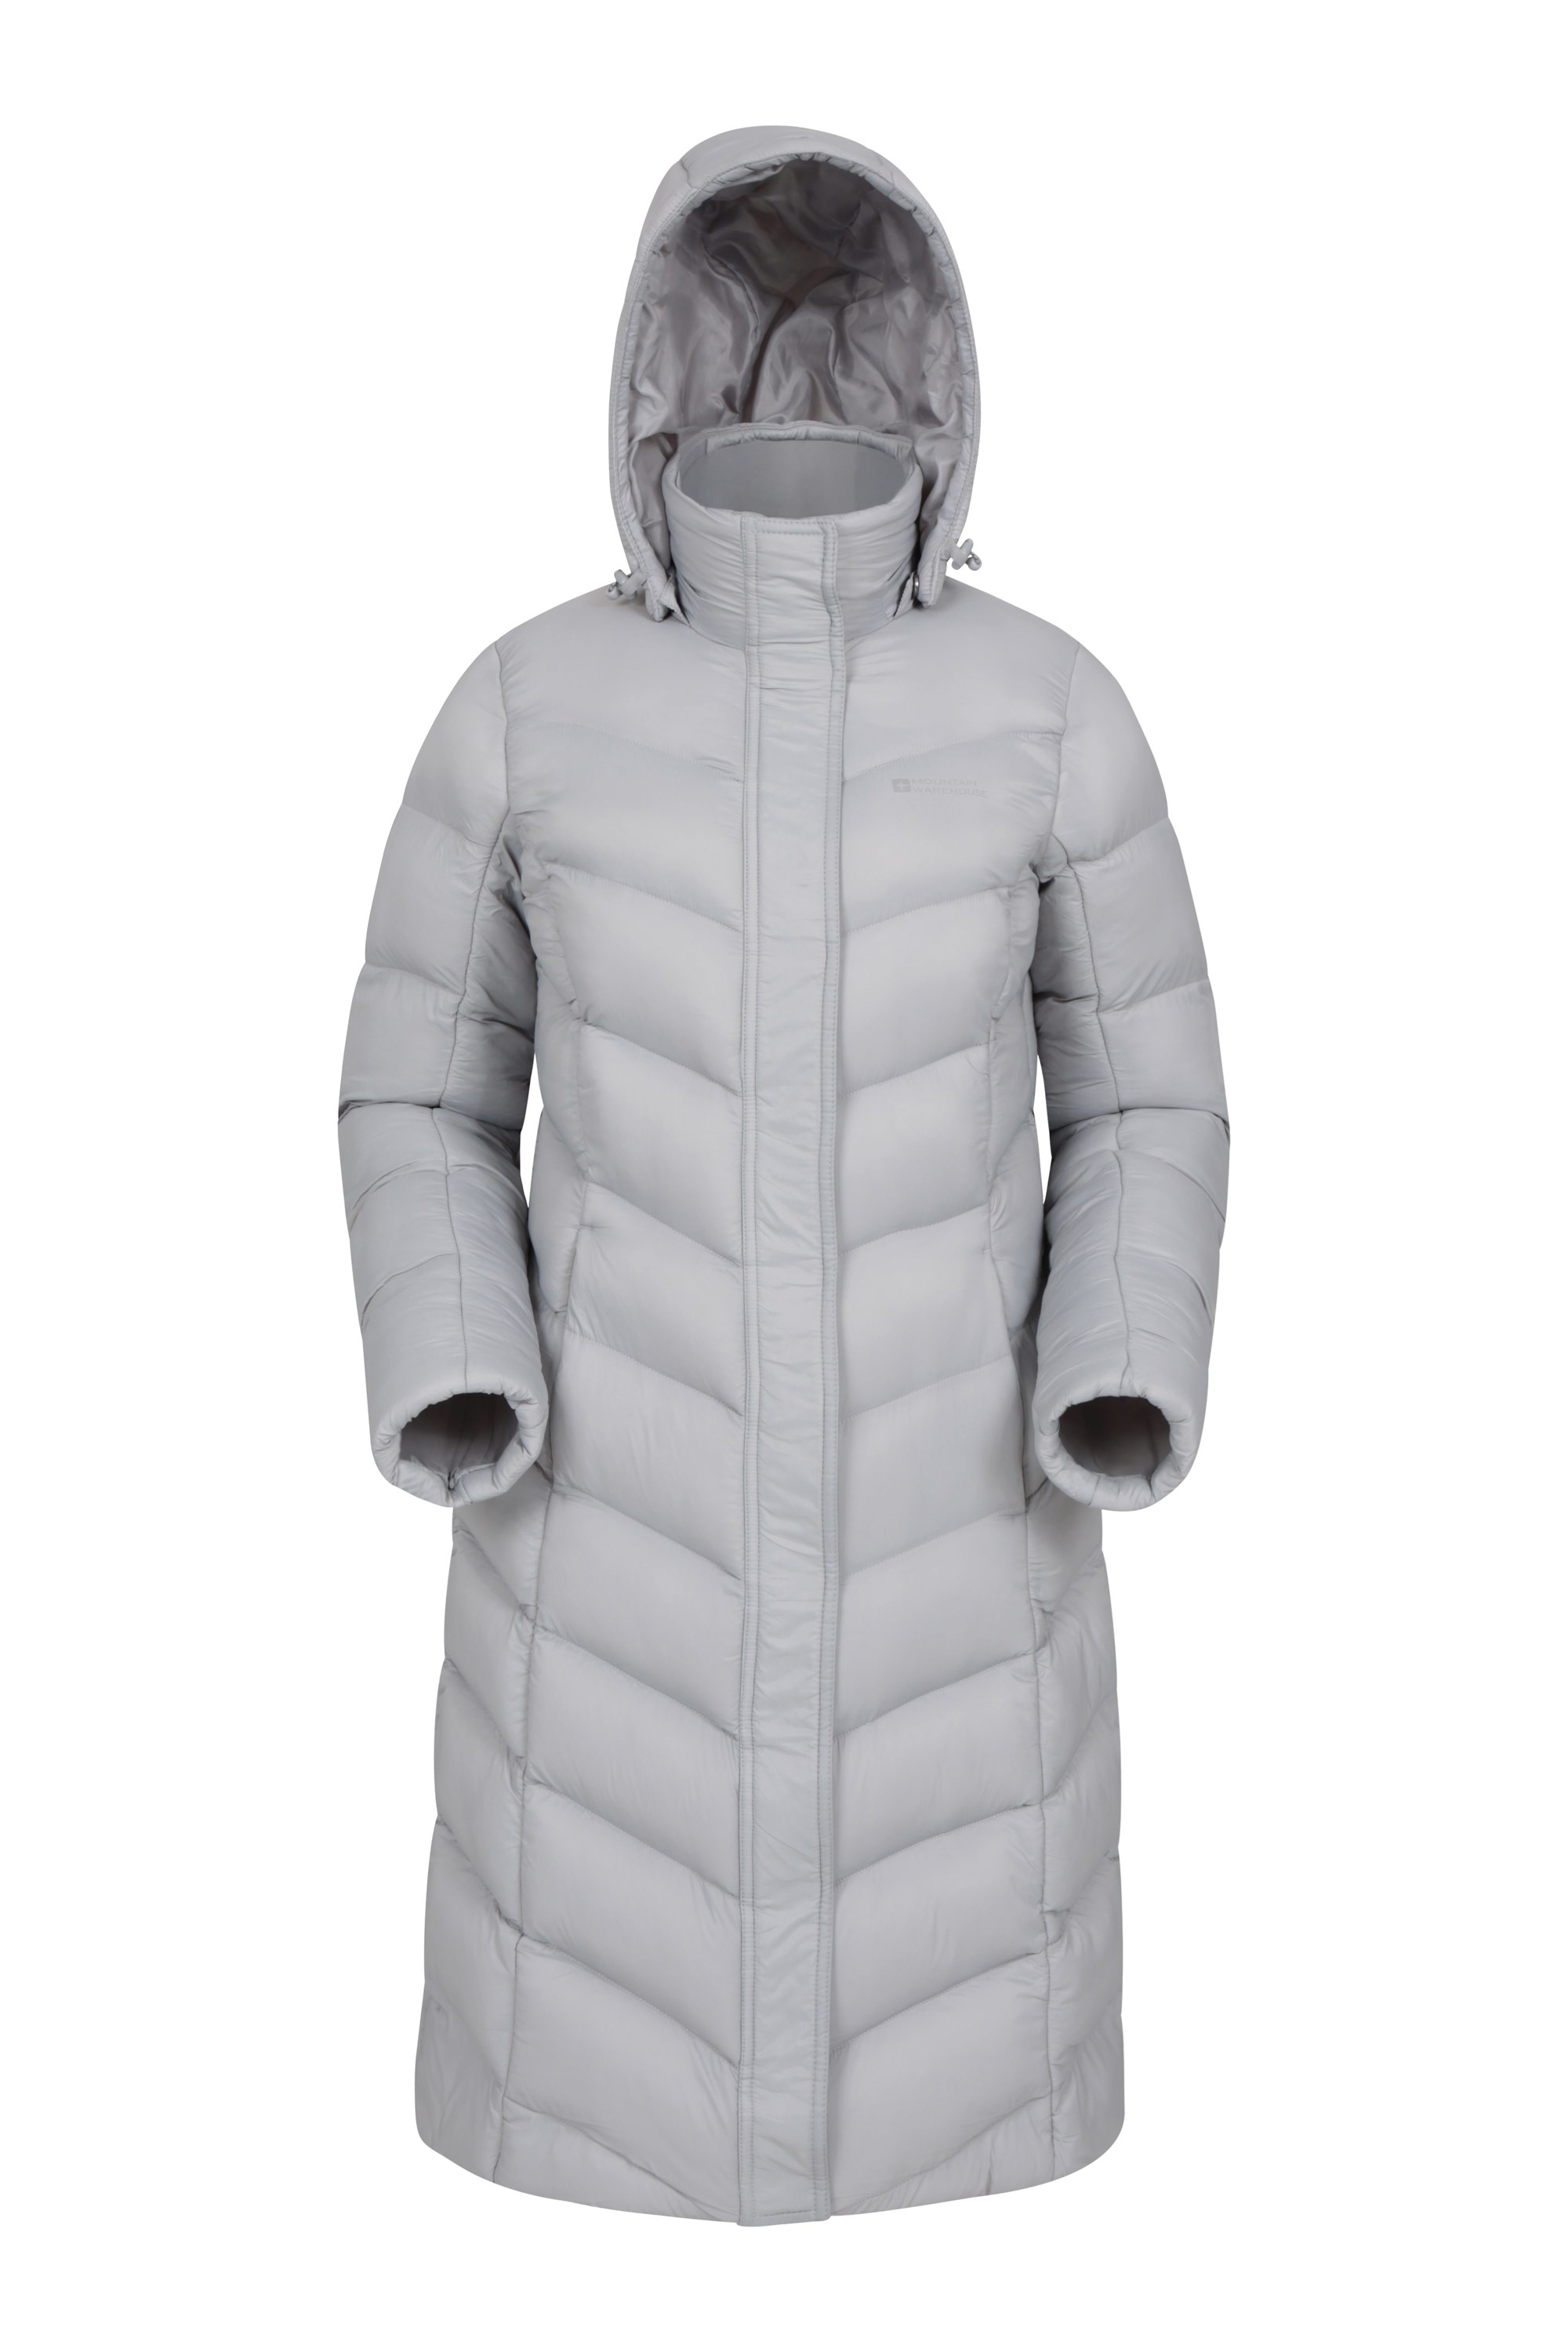 Mountain Warehouse Alexa Womens Padded Jacket Grey